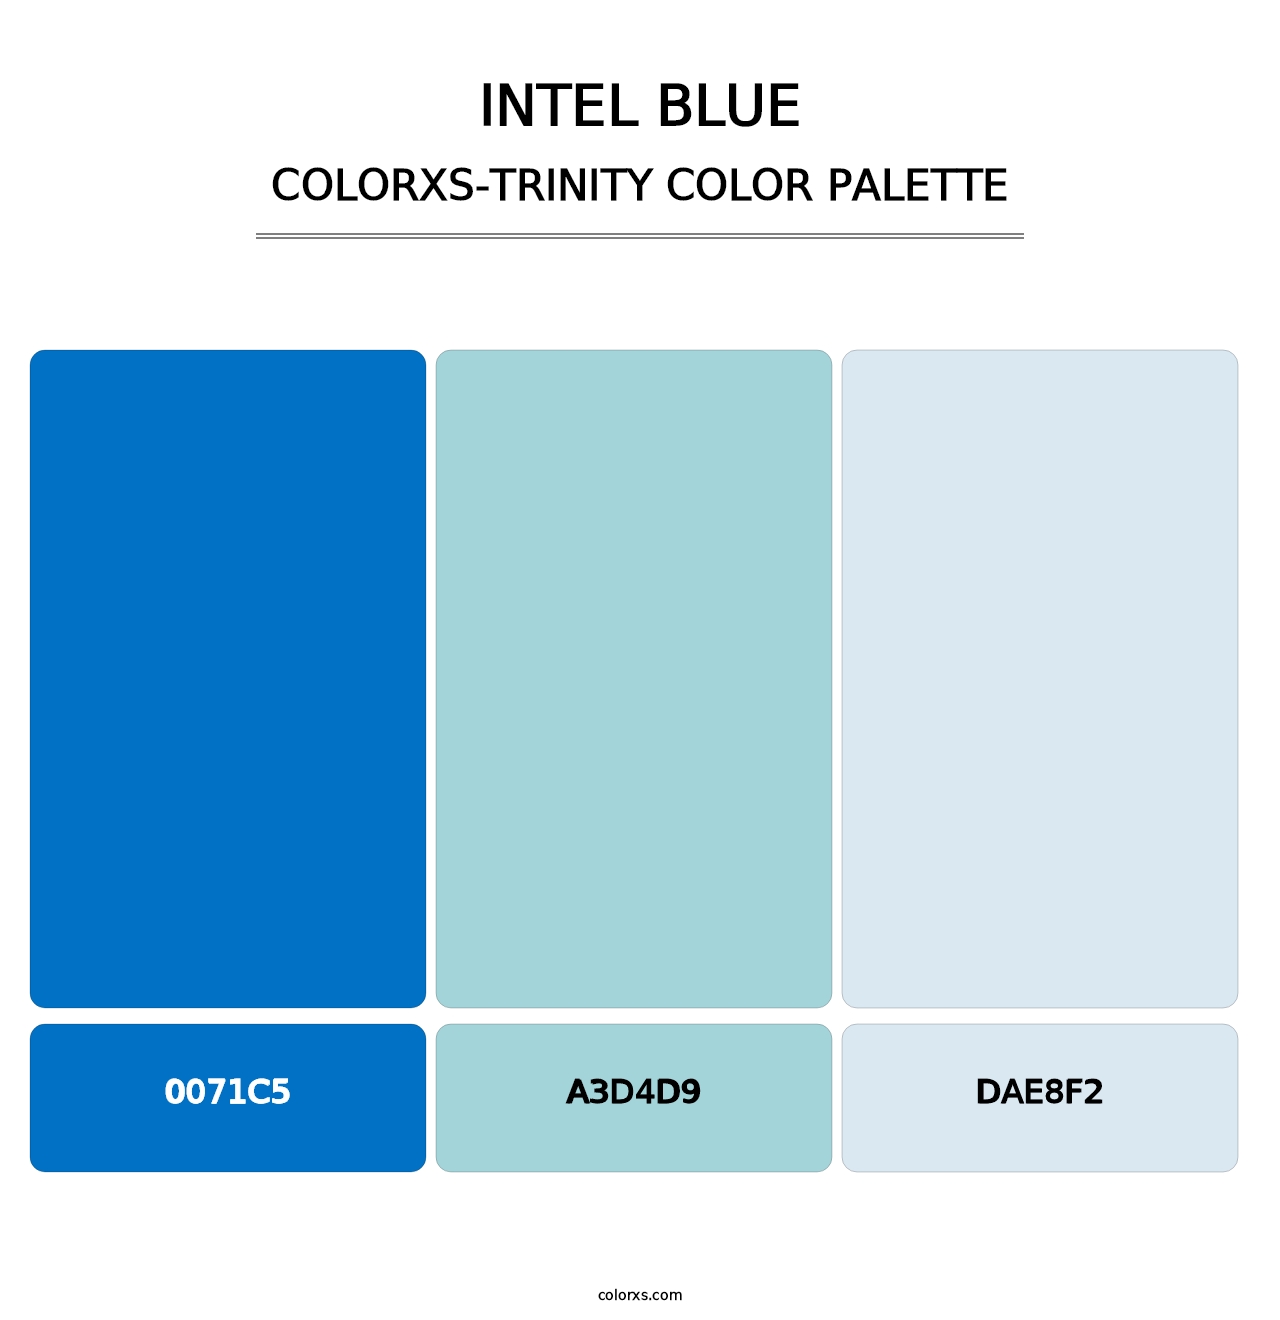 Intel Blue - Colorxs Trinity Palette